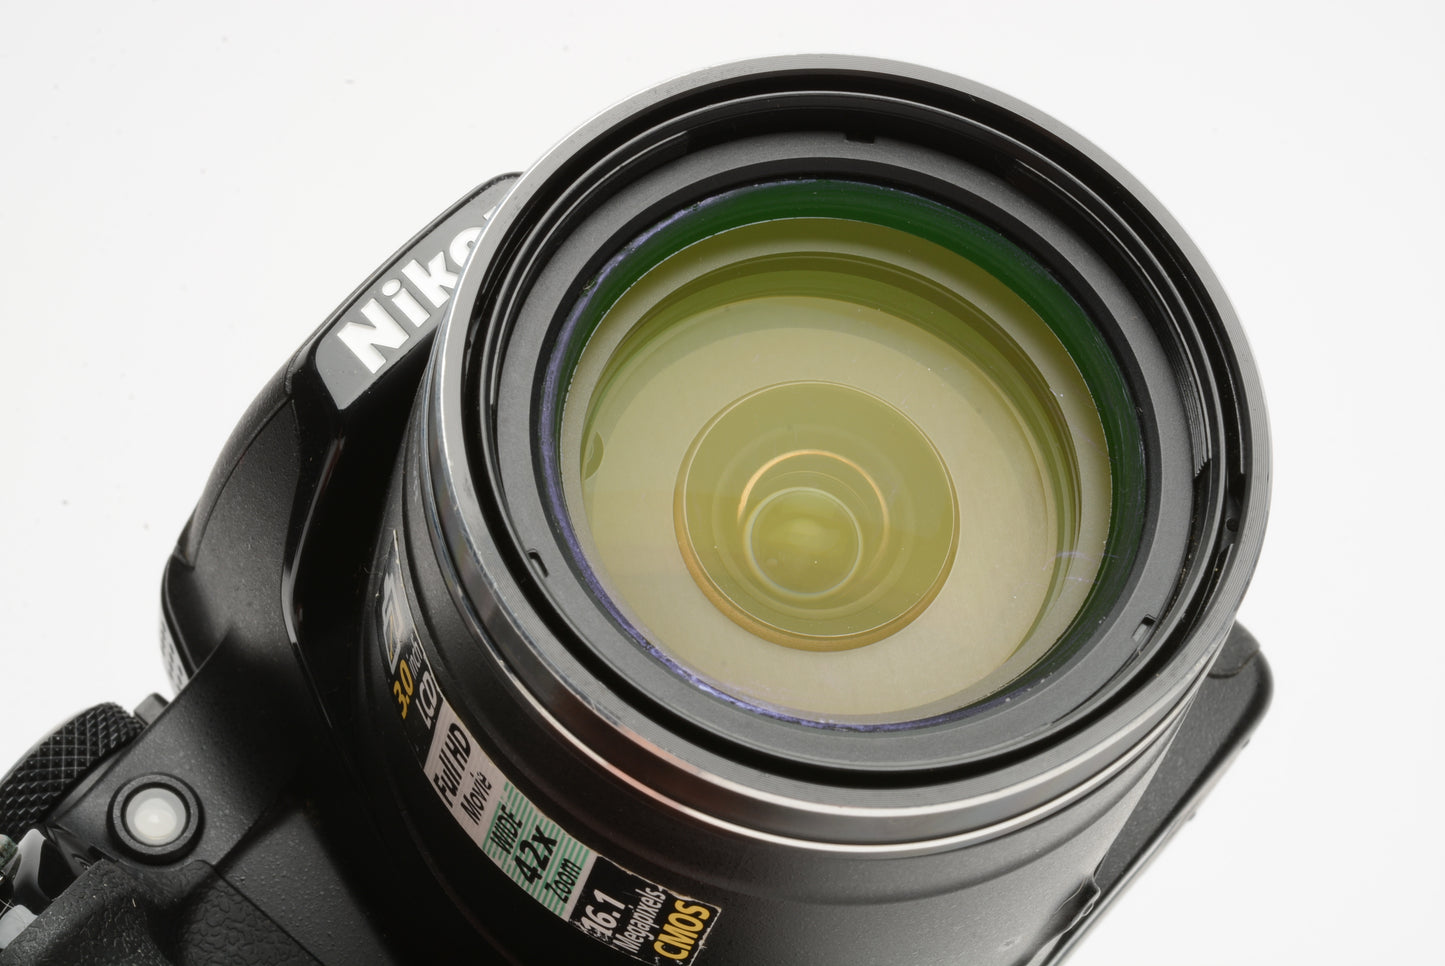 Nikon Coolpix P510 Digital 16.1MP point&shoot camera, 2batts, charger, strap+case